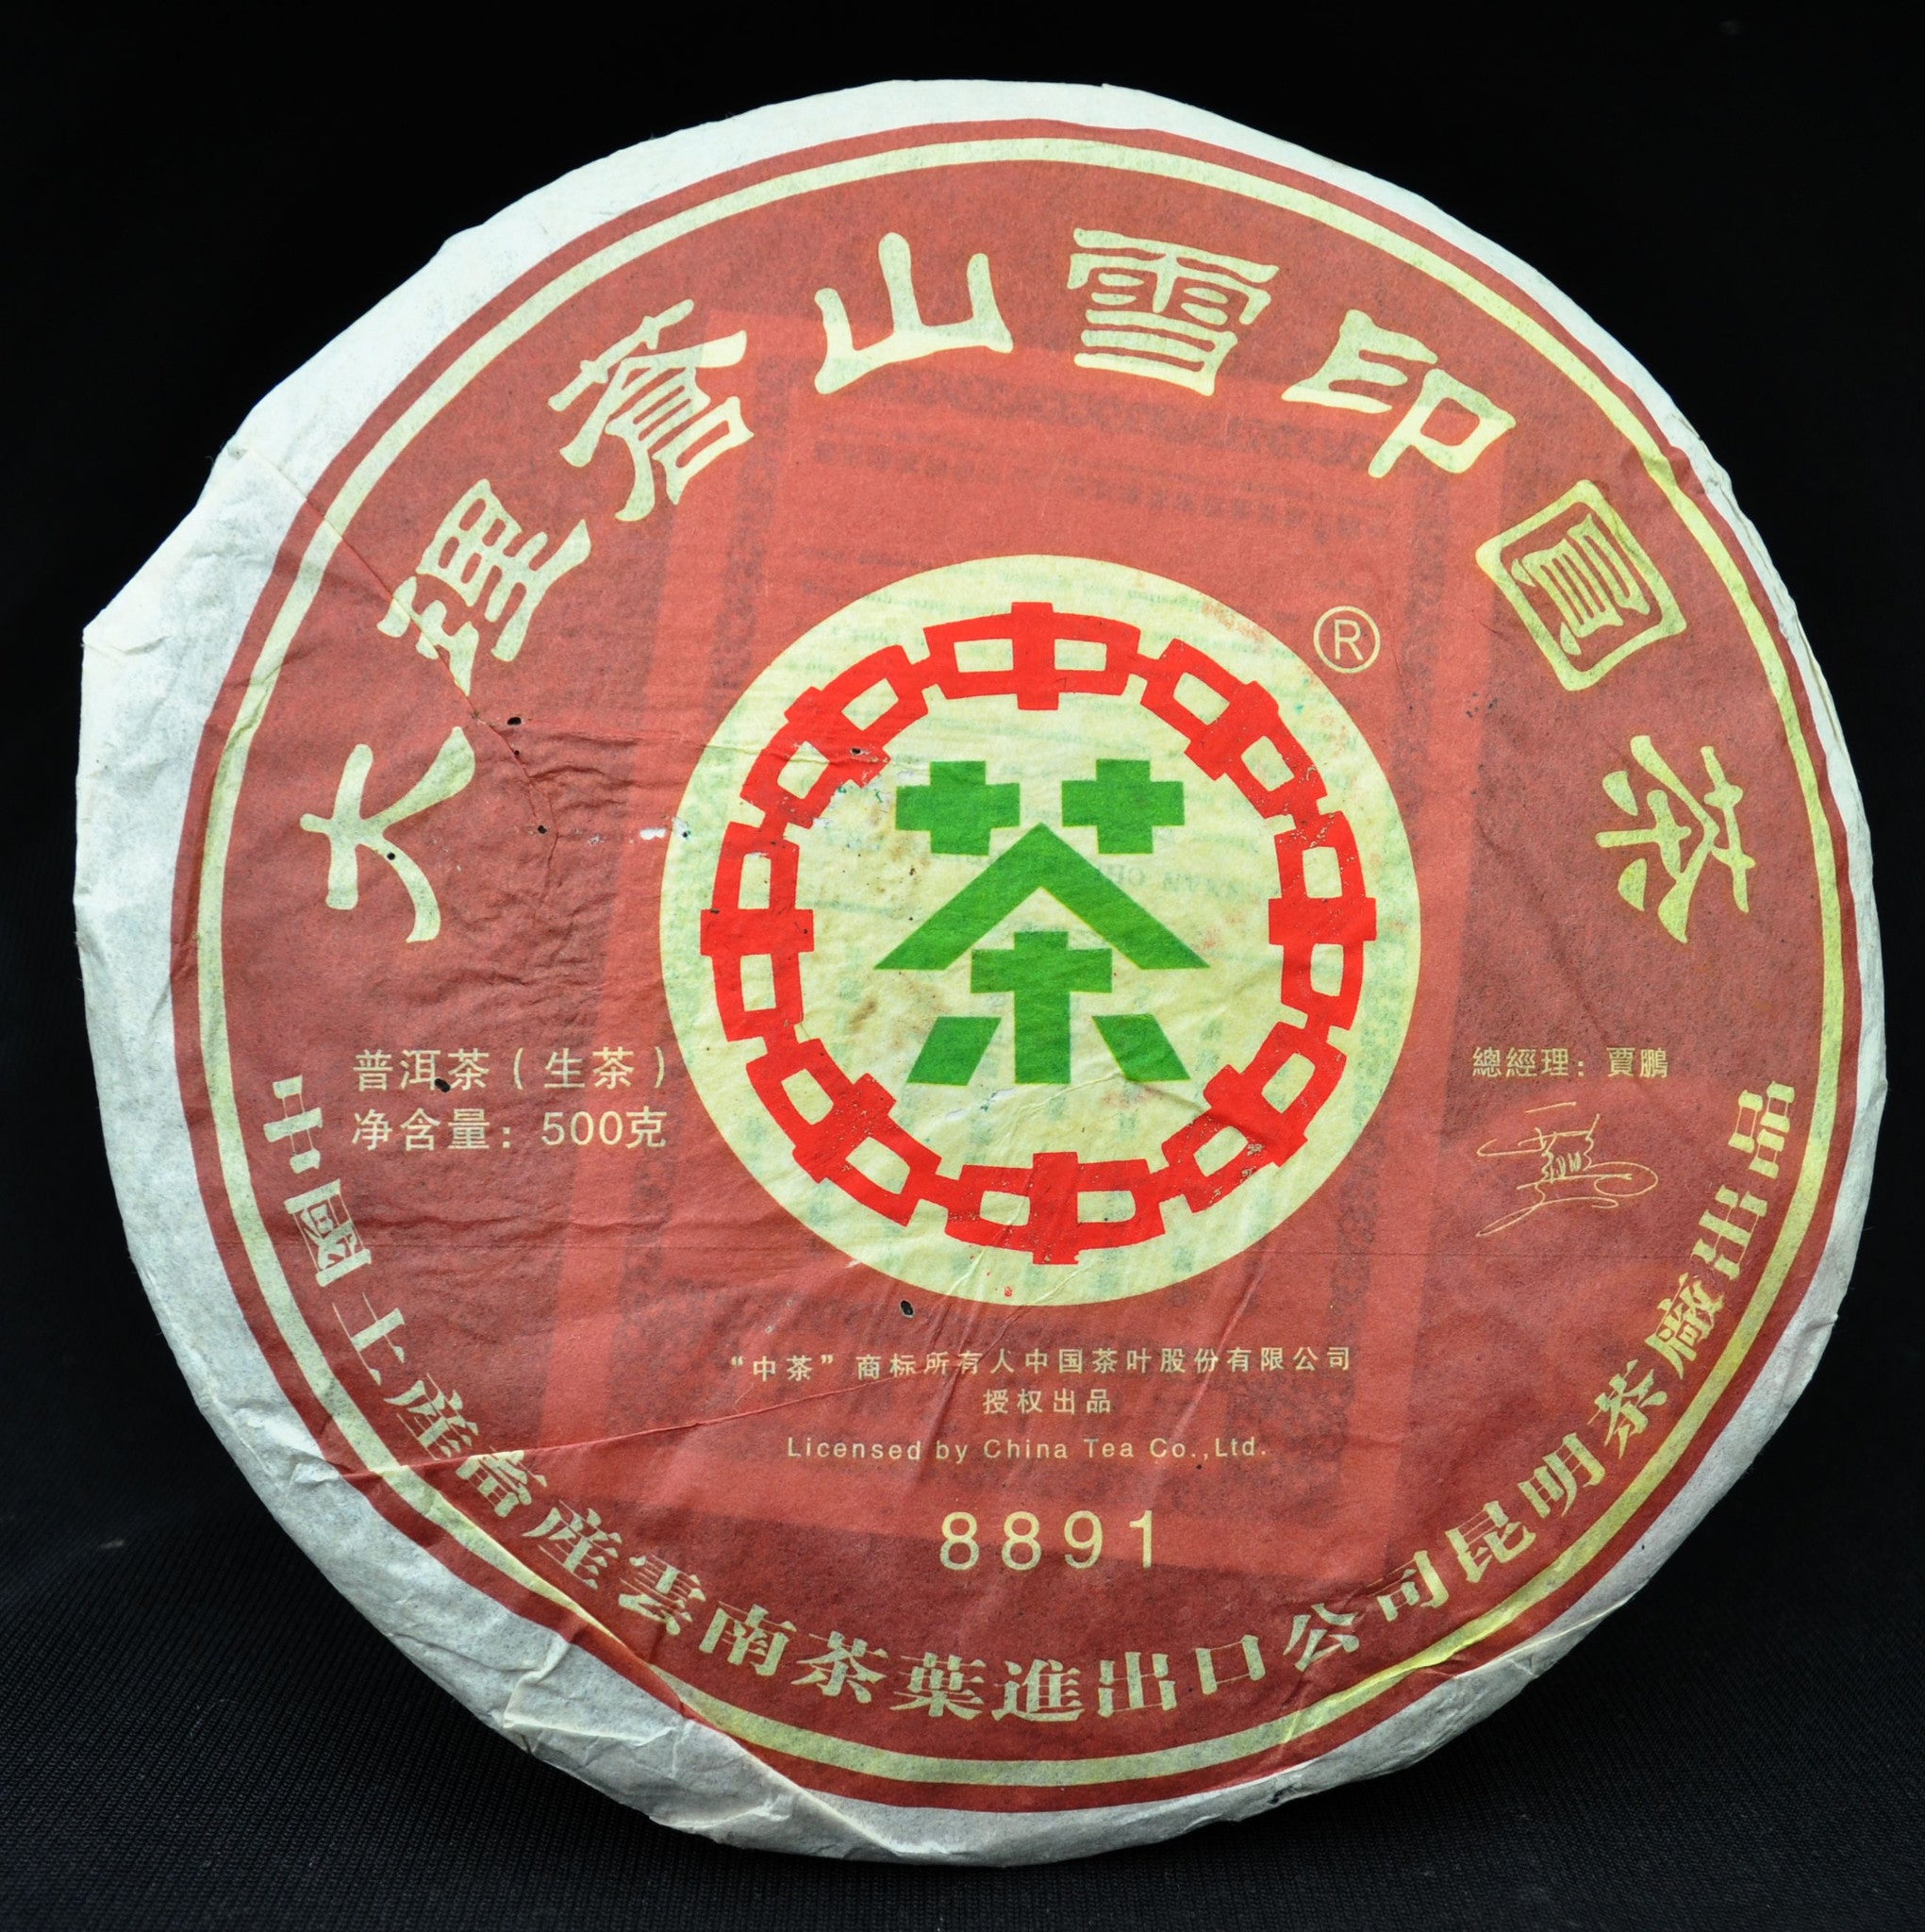 07 Cnnp 81 Red Label Raw Pu Erh Tea Cake Yunnan Sourcing Tea Shop